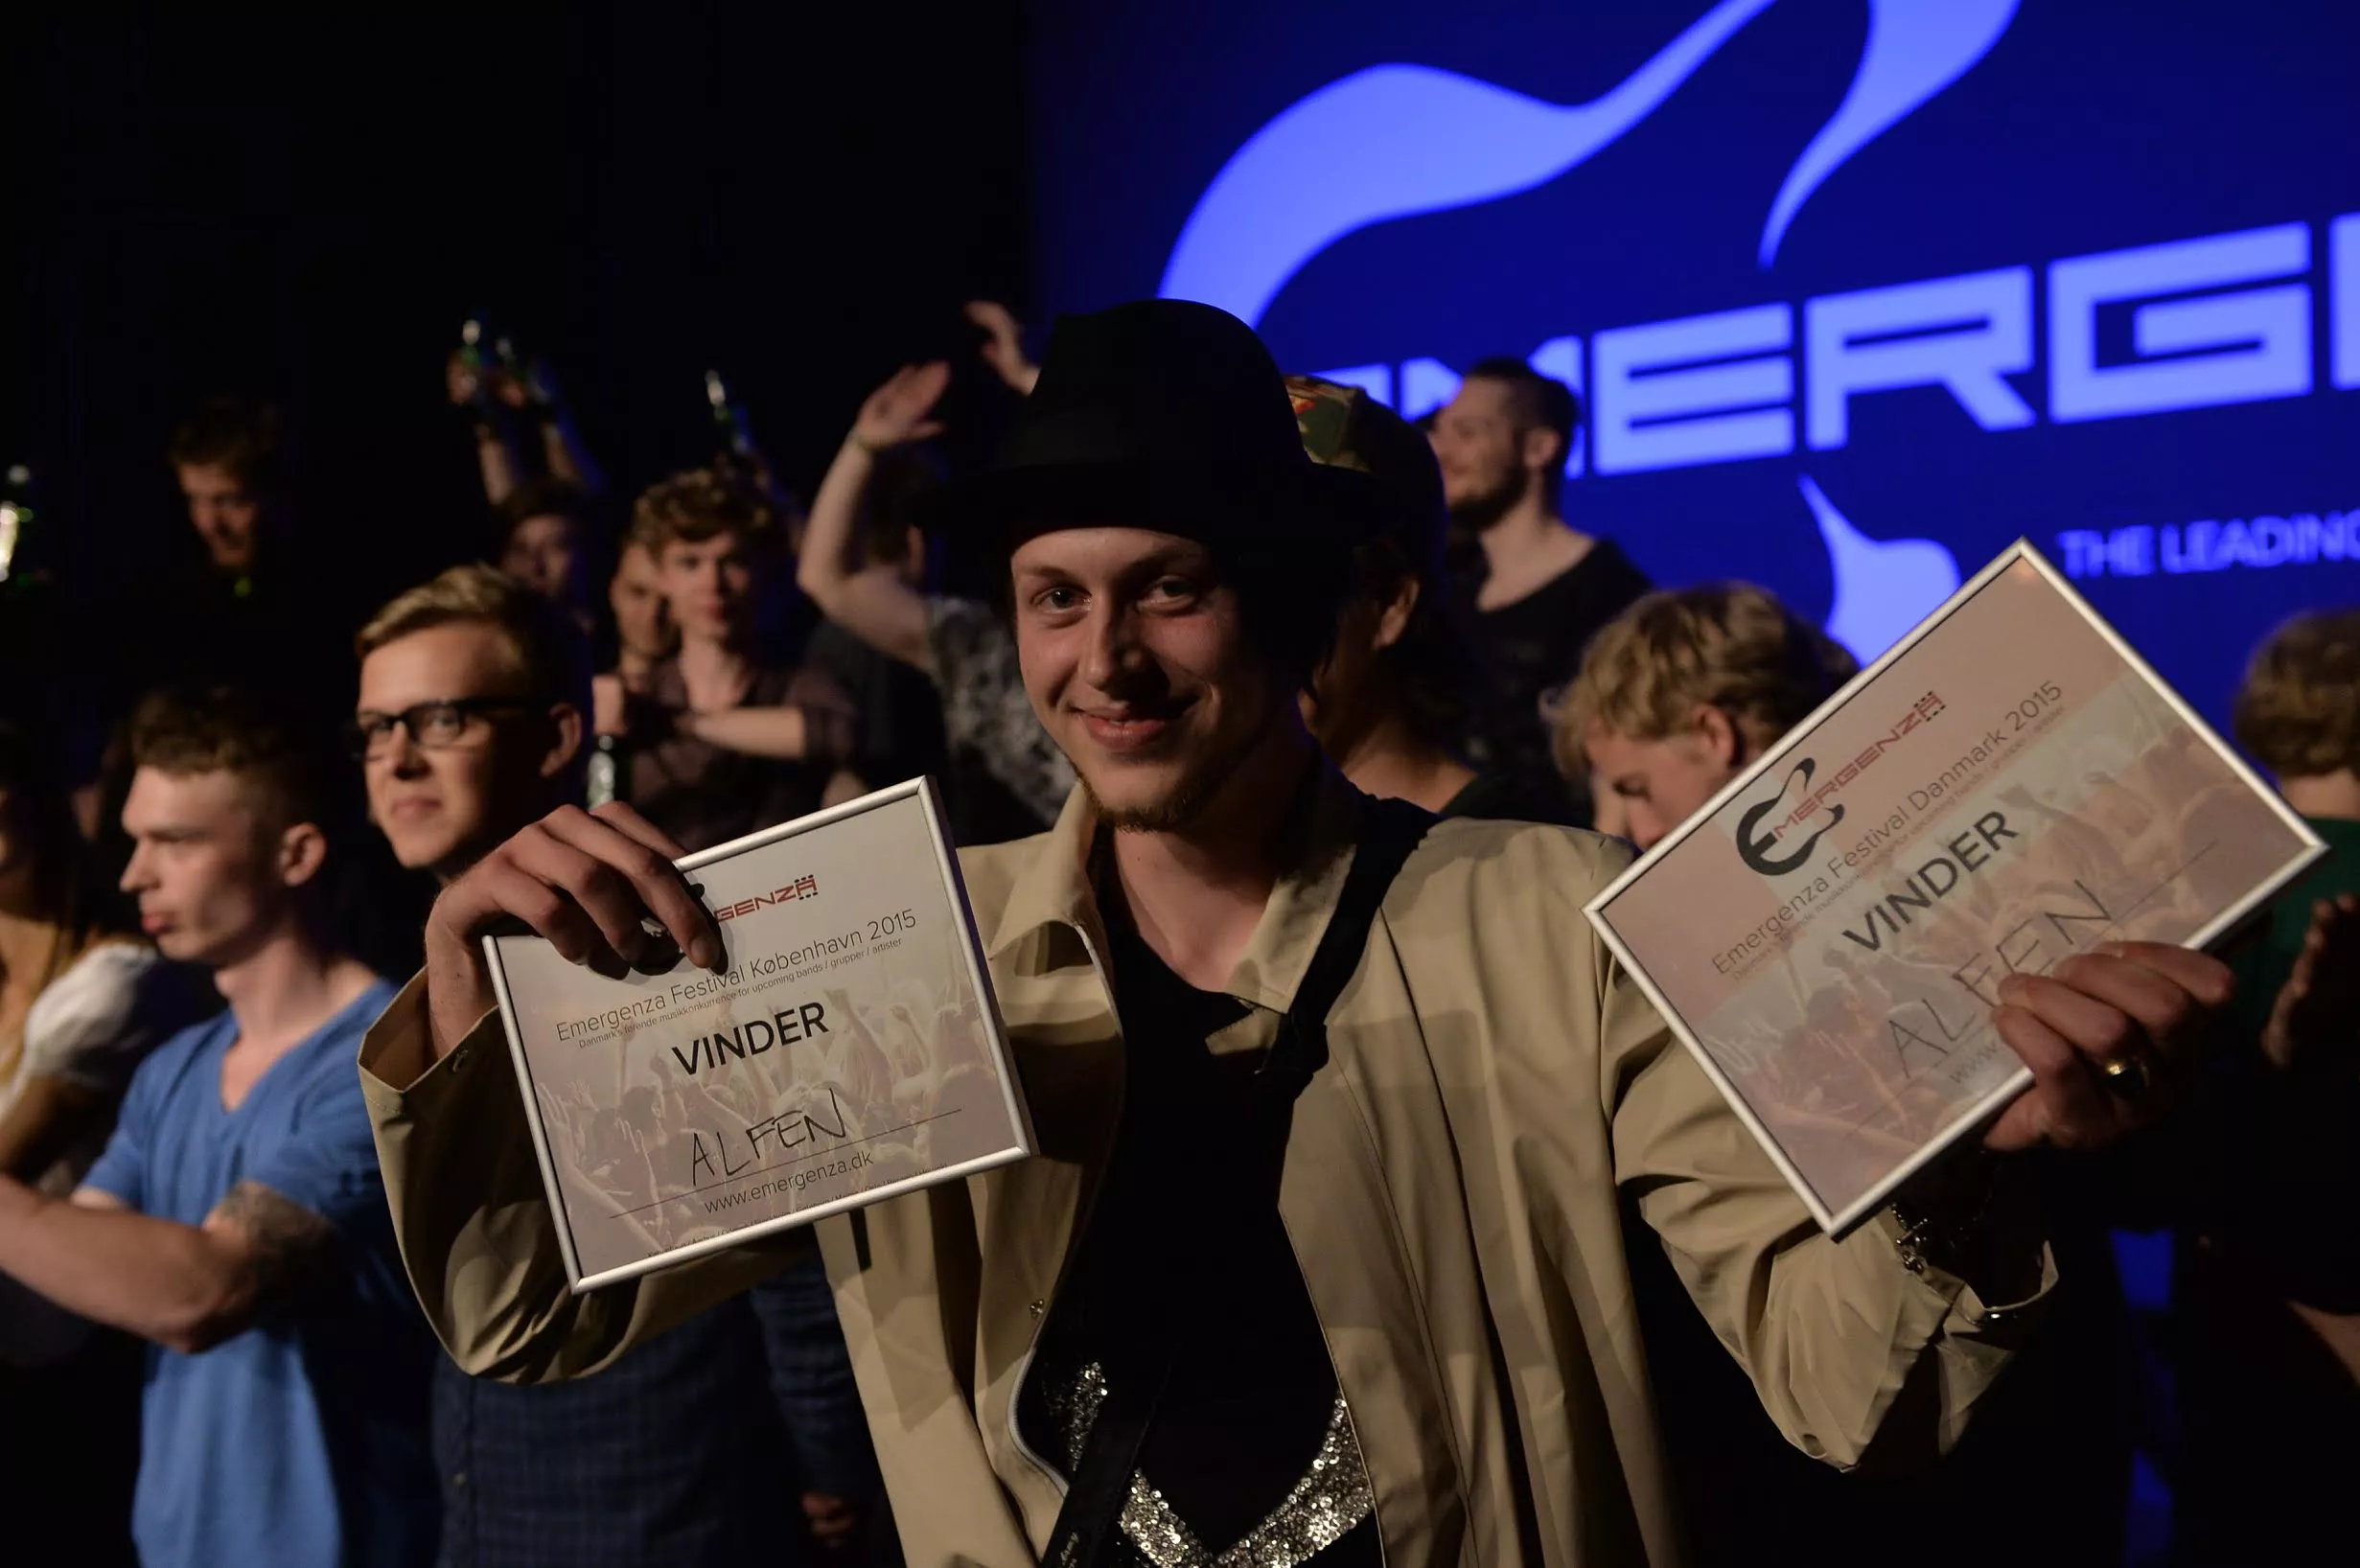 Alfen vinder dansk Emergenza 2015